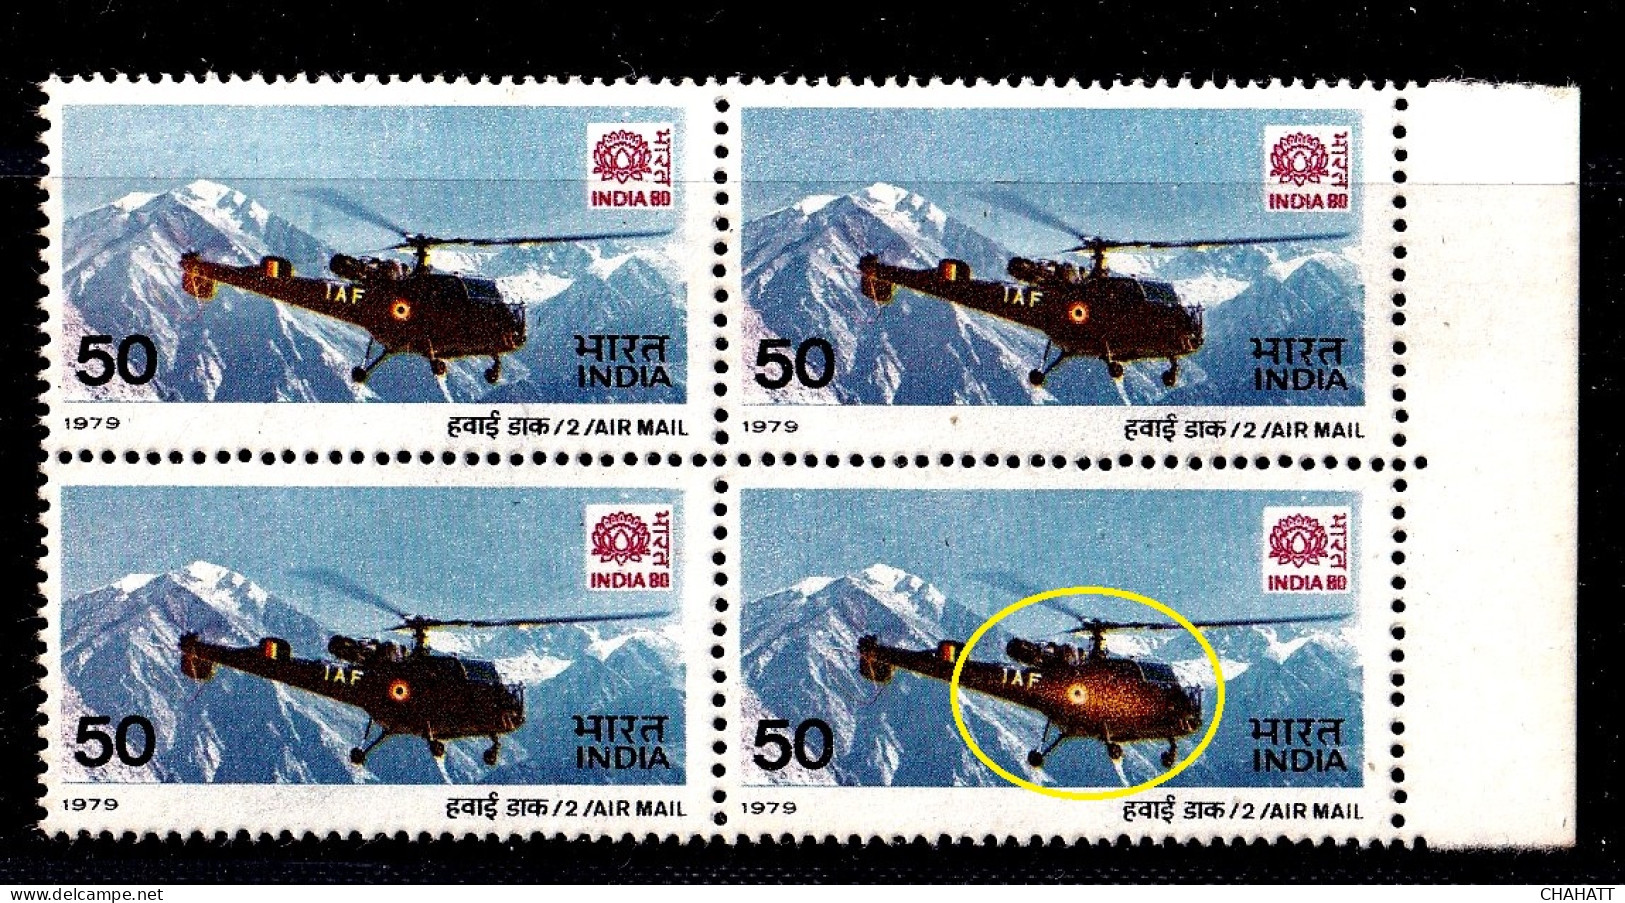 INDIA-1979- AIRMAIL-HELICOPTERS-50p- ERROR-COLOR VARIETY - BLOCK OF 4- H2-25 - Abarten Und Kuriositäten